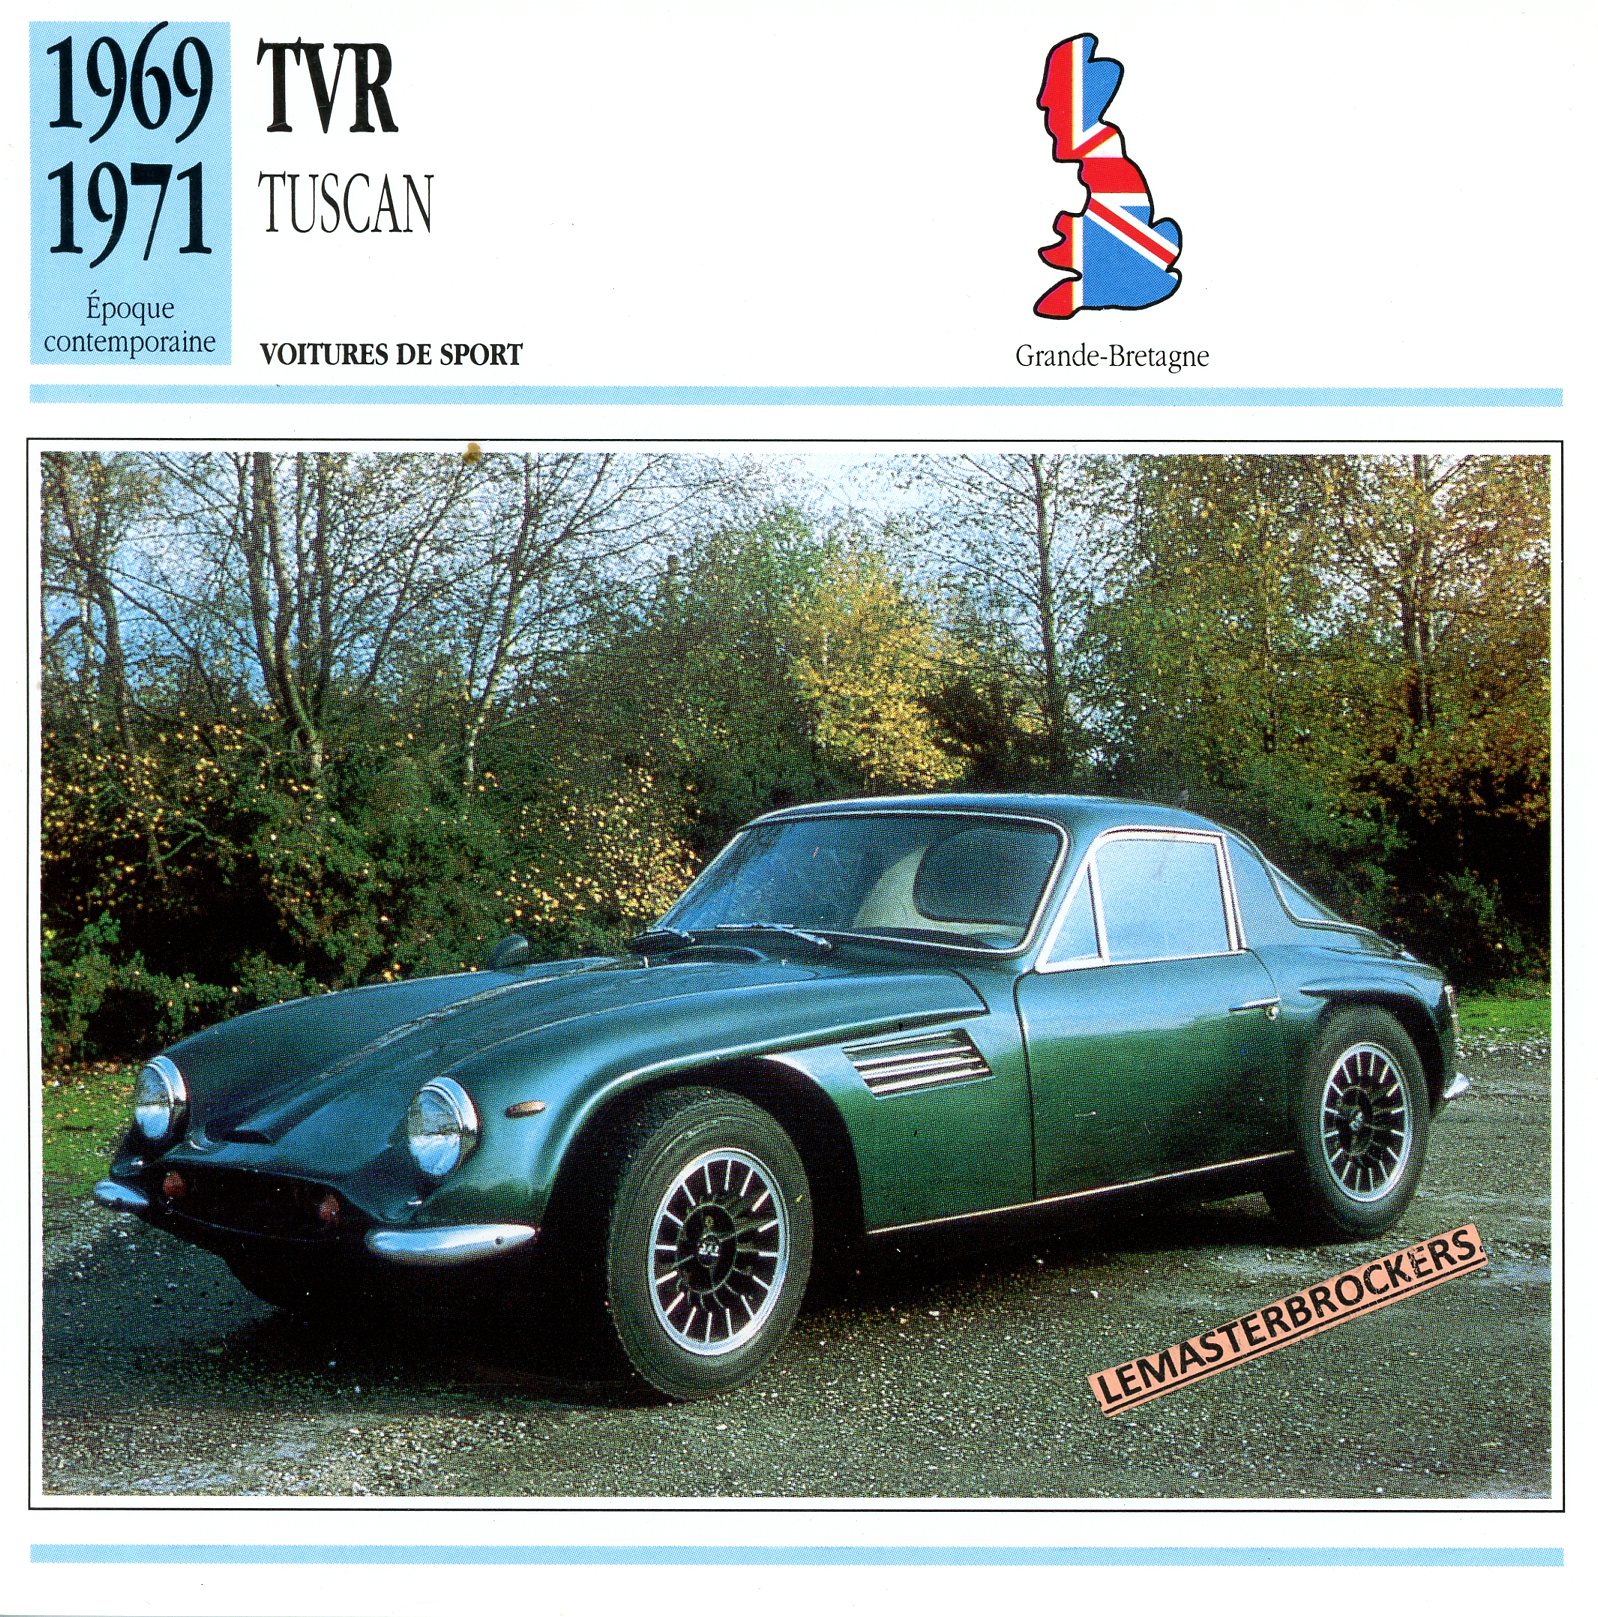 TVR-TUSCAN-1971-FICHE-AUTO-LEMASTERBROCKERS-ATLAS-ÉDITION